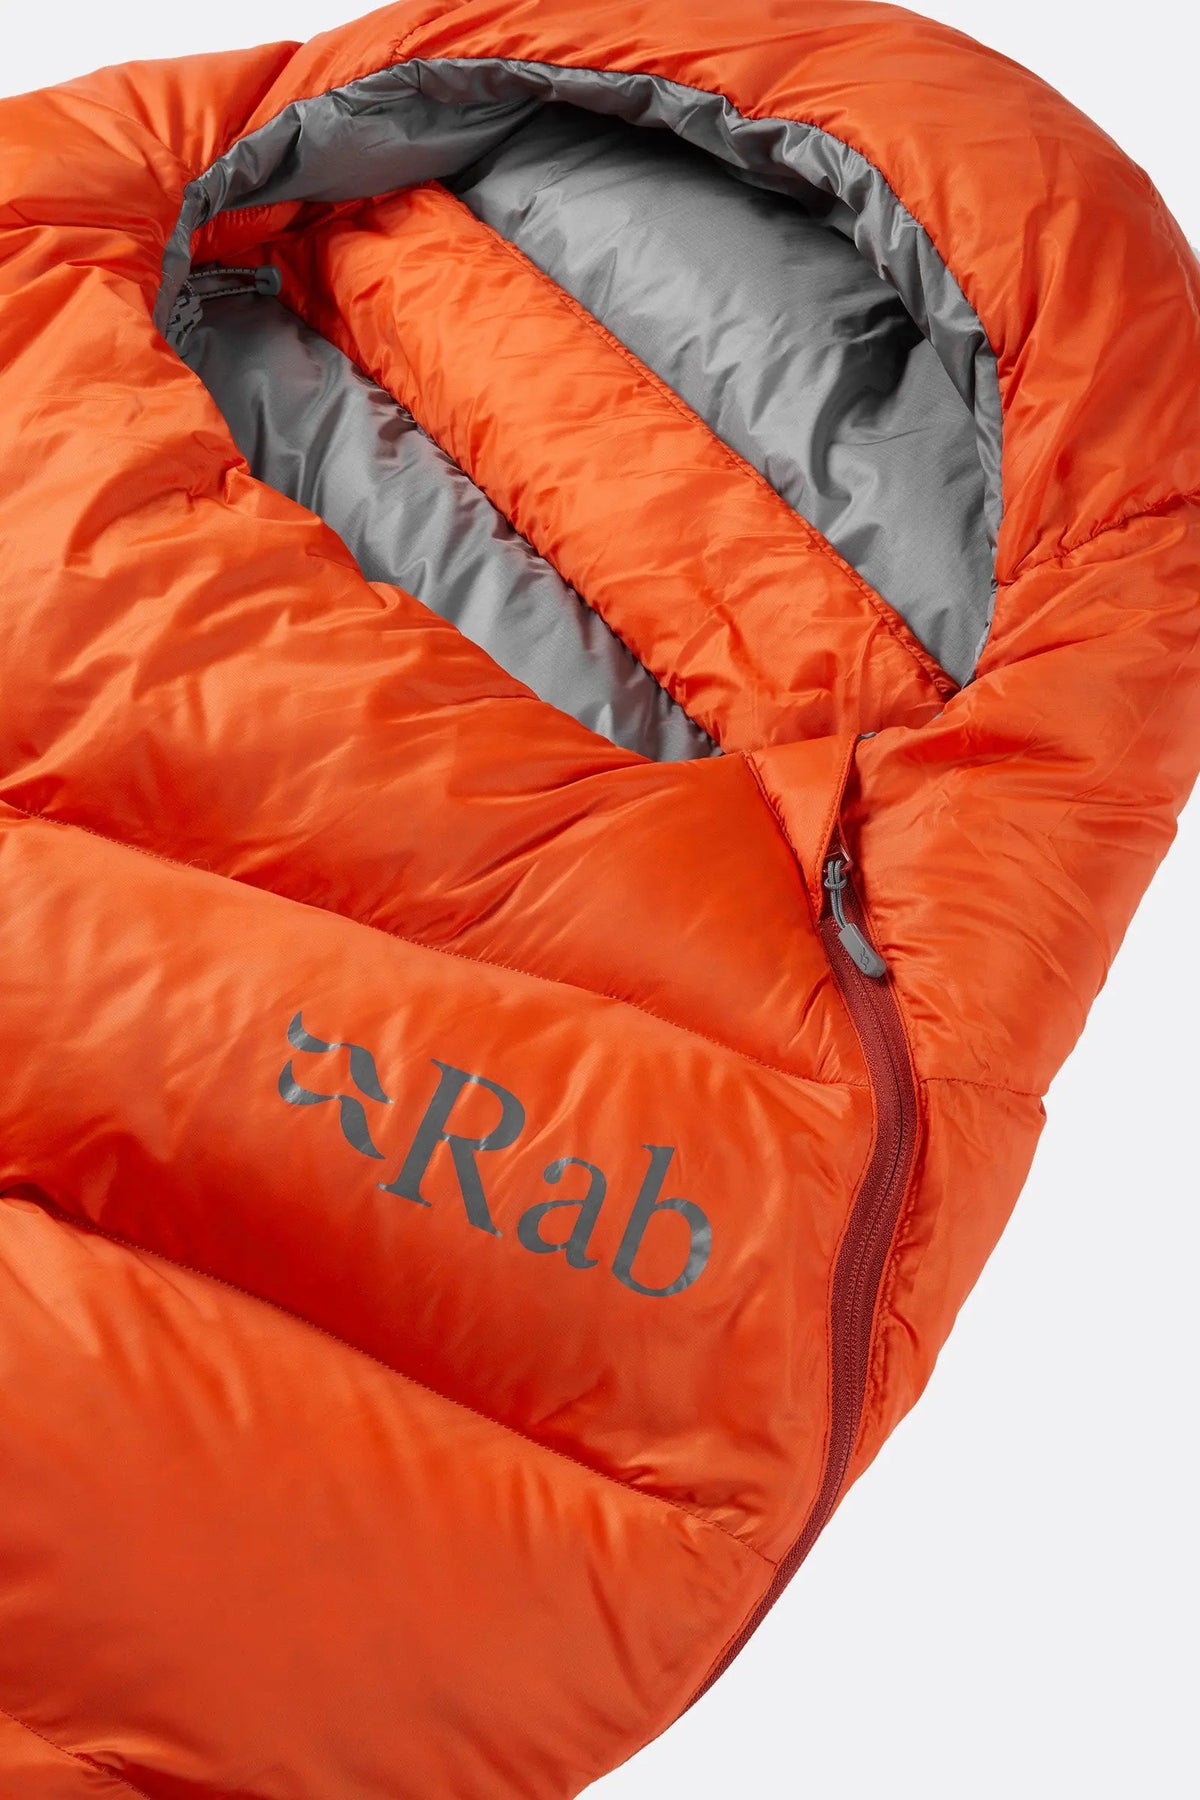 Rab Alpine 200 Down Sleeping Bag (3c)